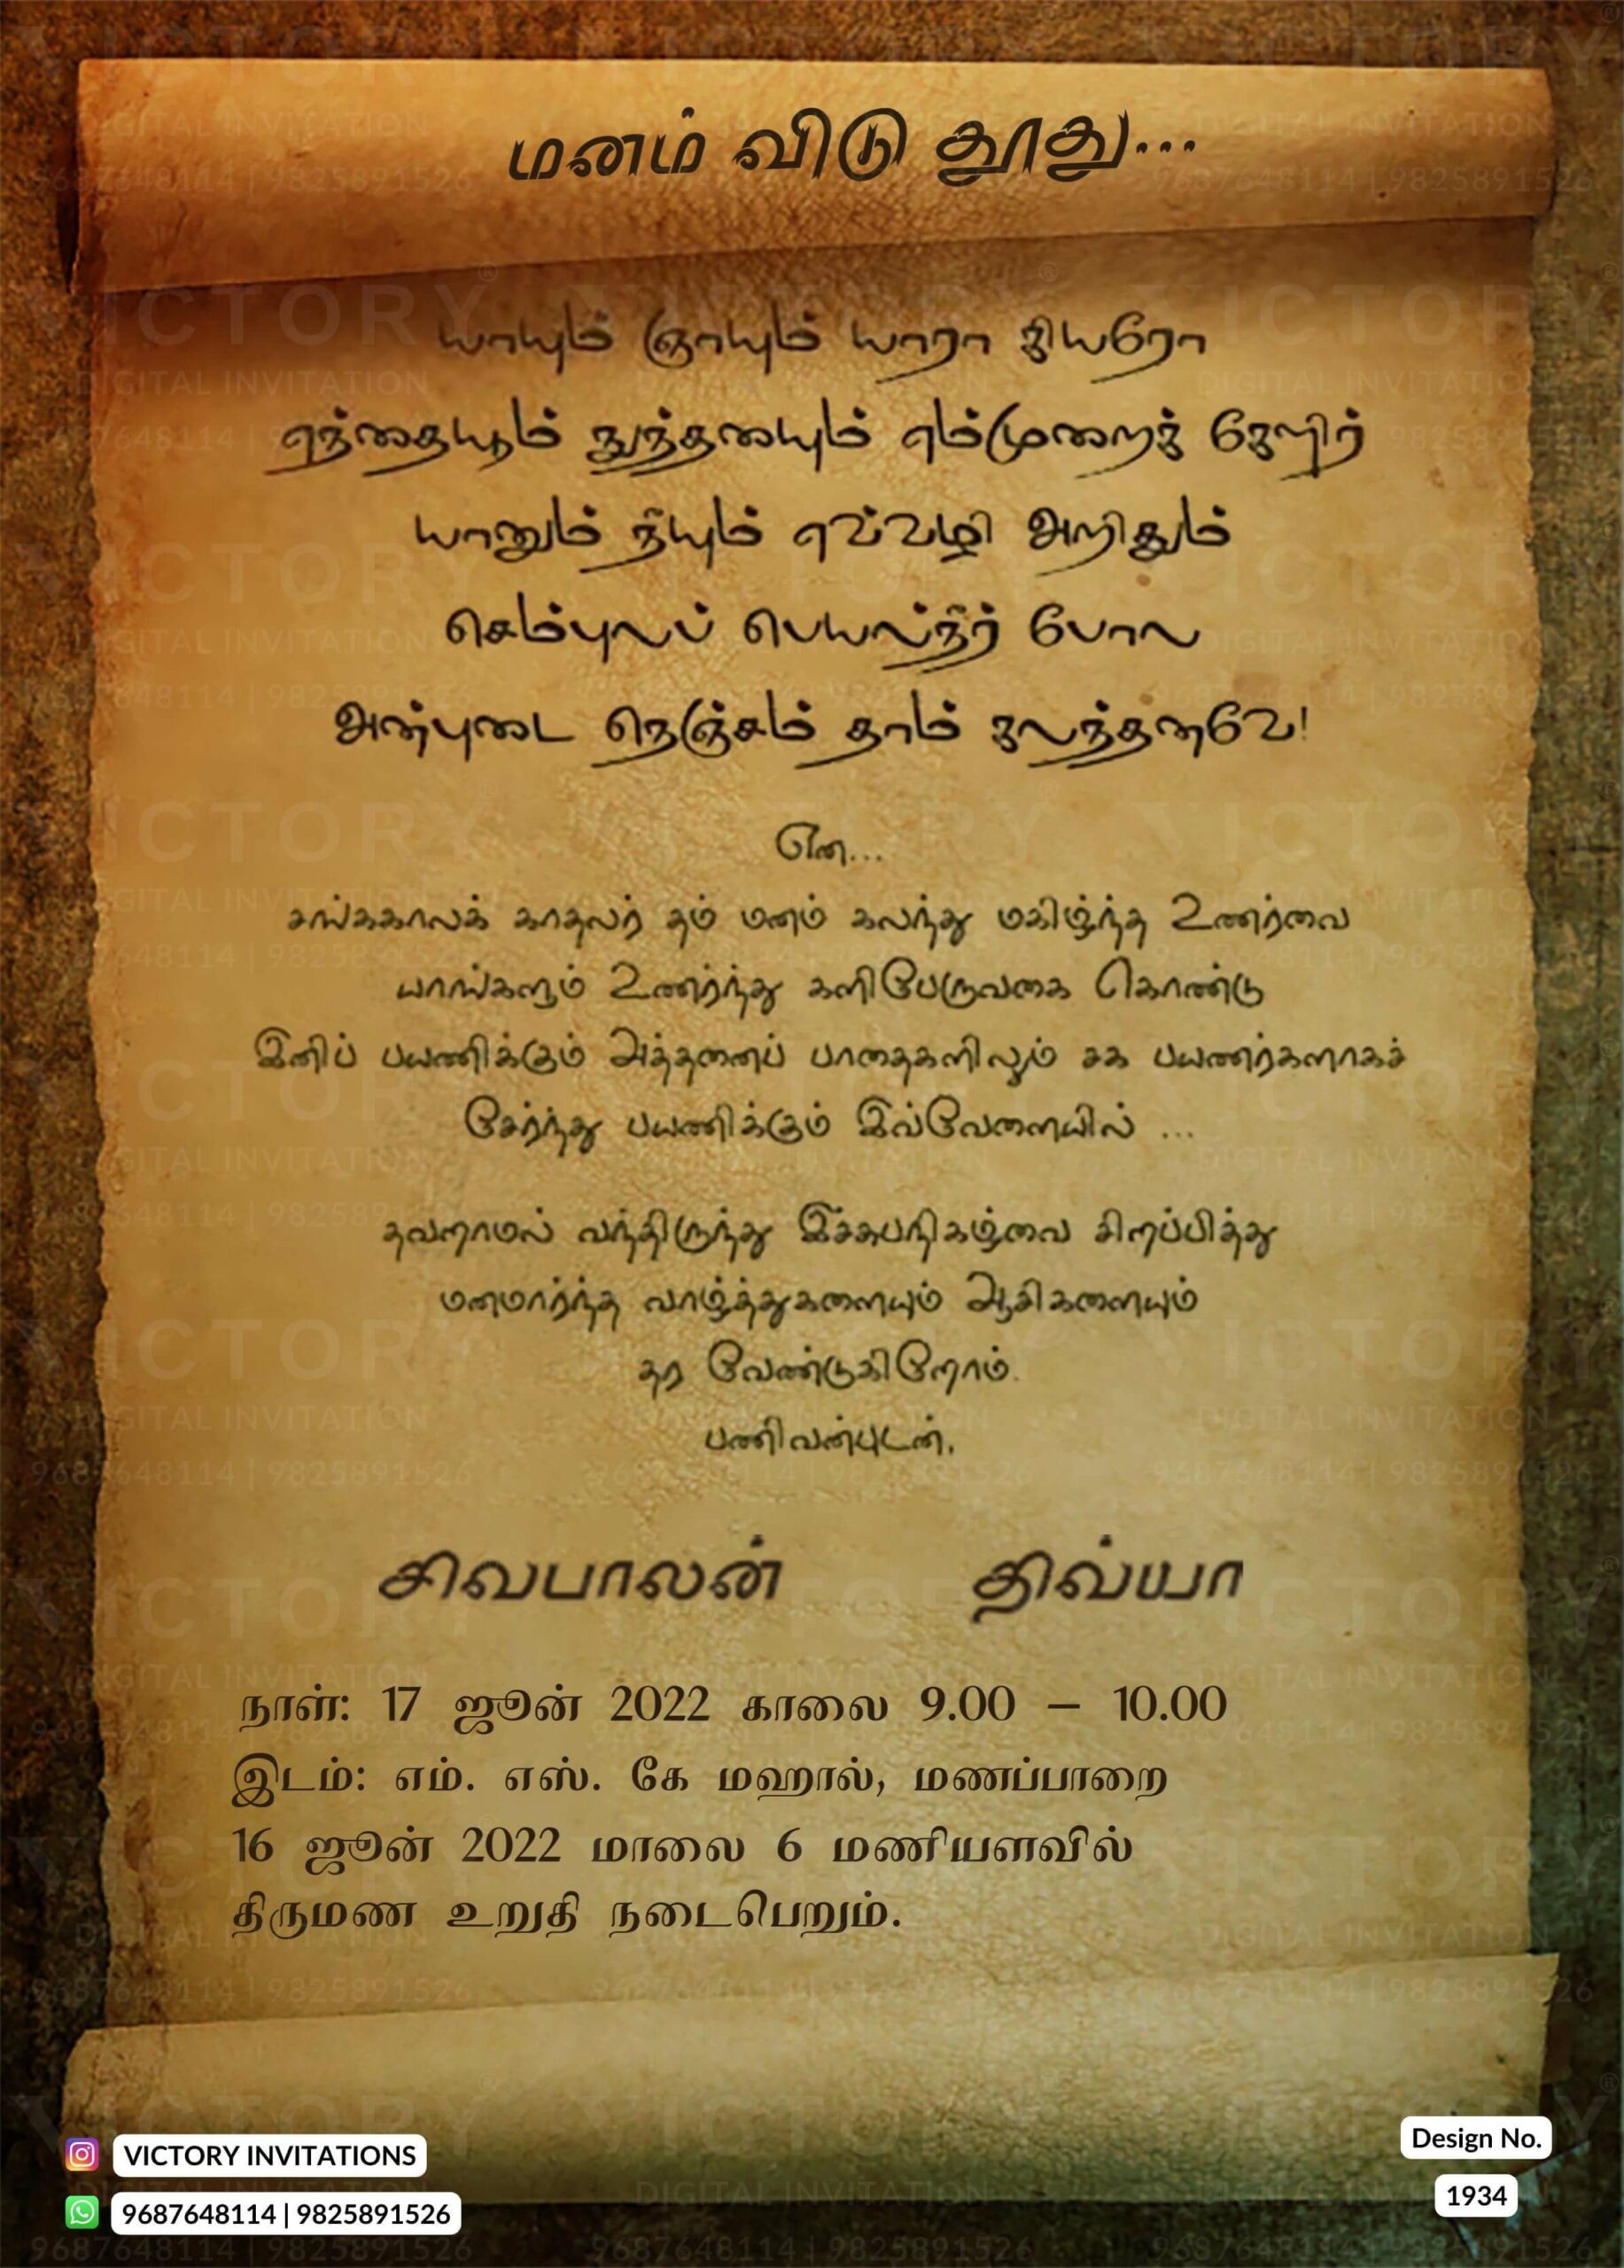 wedding invitation card in tamil design no.1934